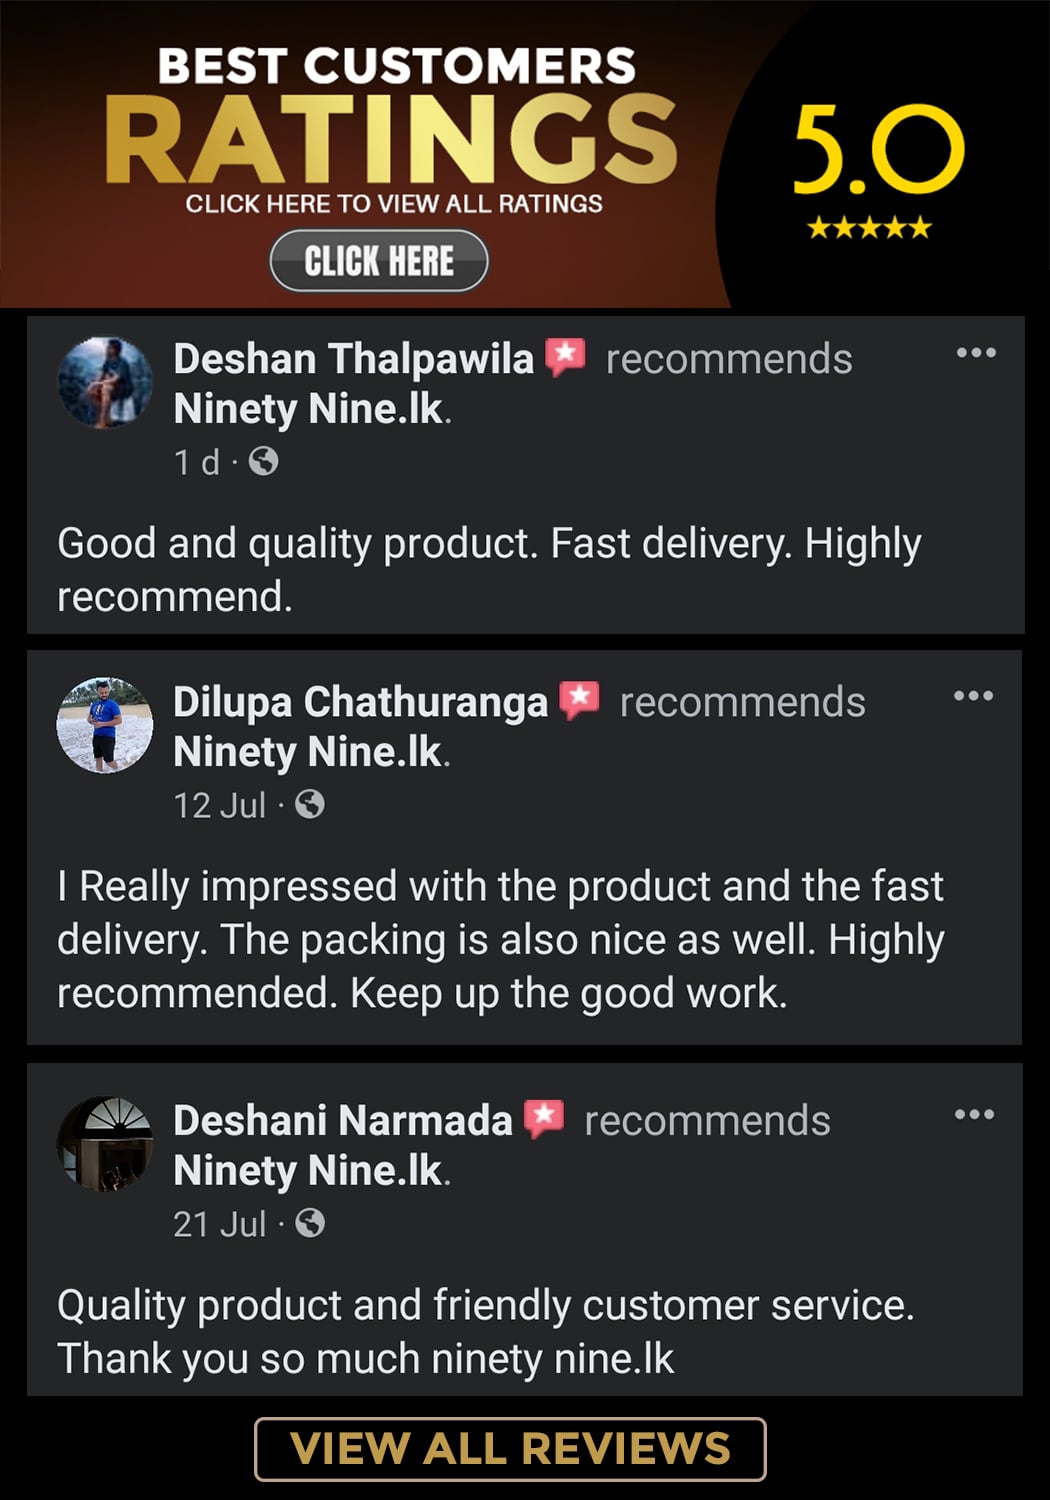 ninetynine.lk customer ratings